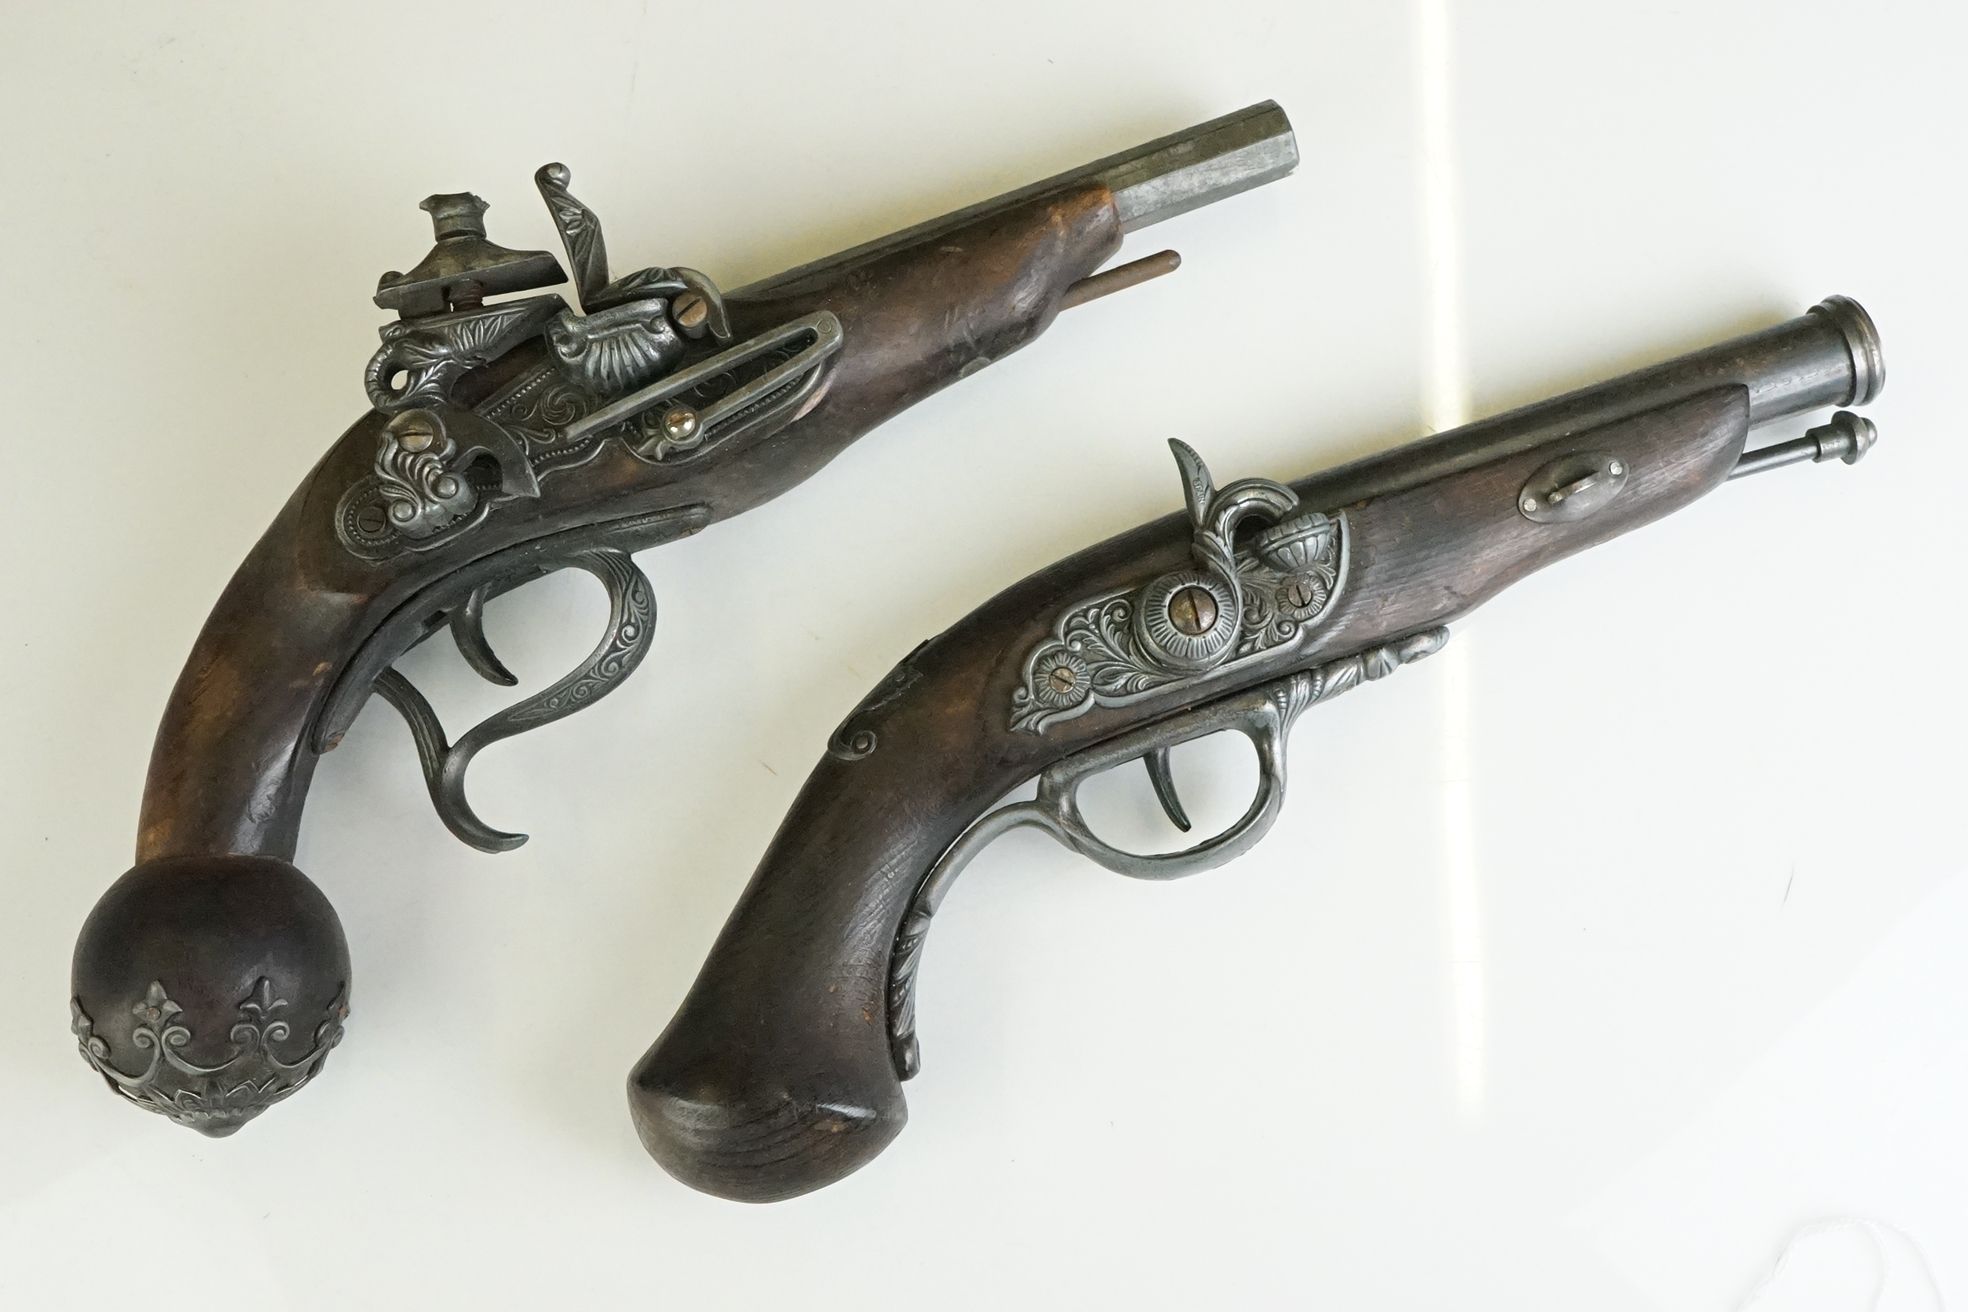 Pair of vintage replica flintlock pistols